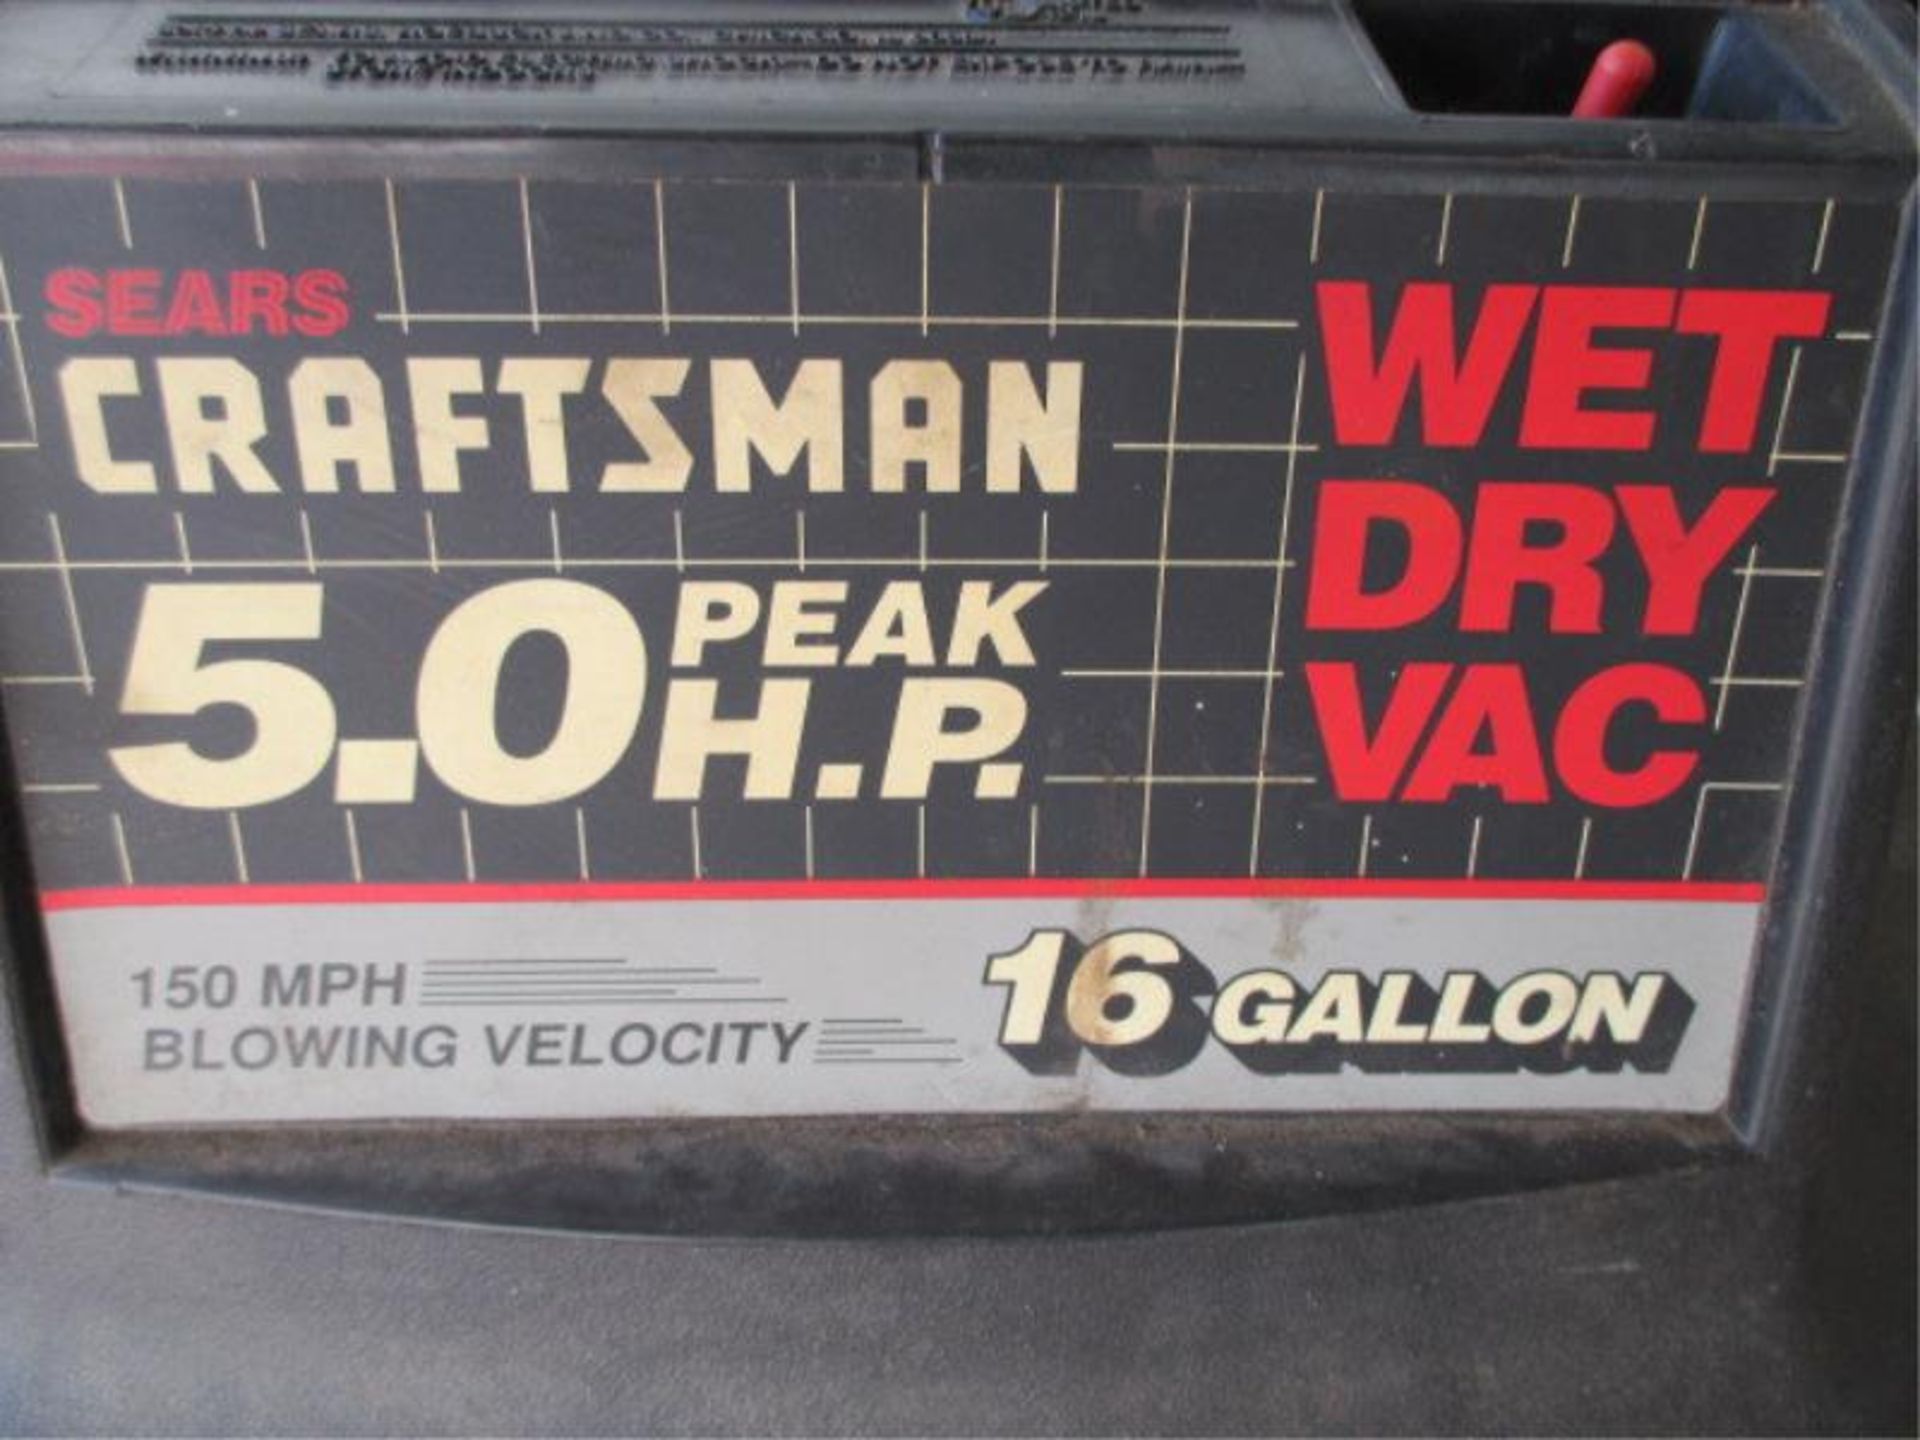 Crafsman Wet / Dry Vac, 18 Gallon, 5.0 Peak HP, 150 Blower MPH, Black, No Hose 150 Blower MPH, - Image 3 of 11